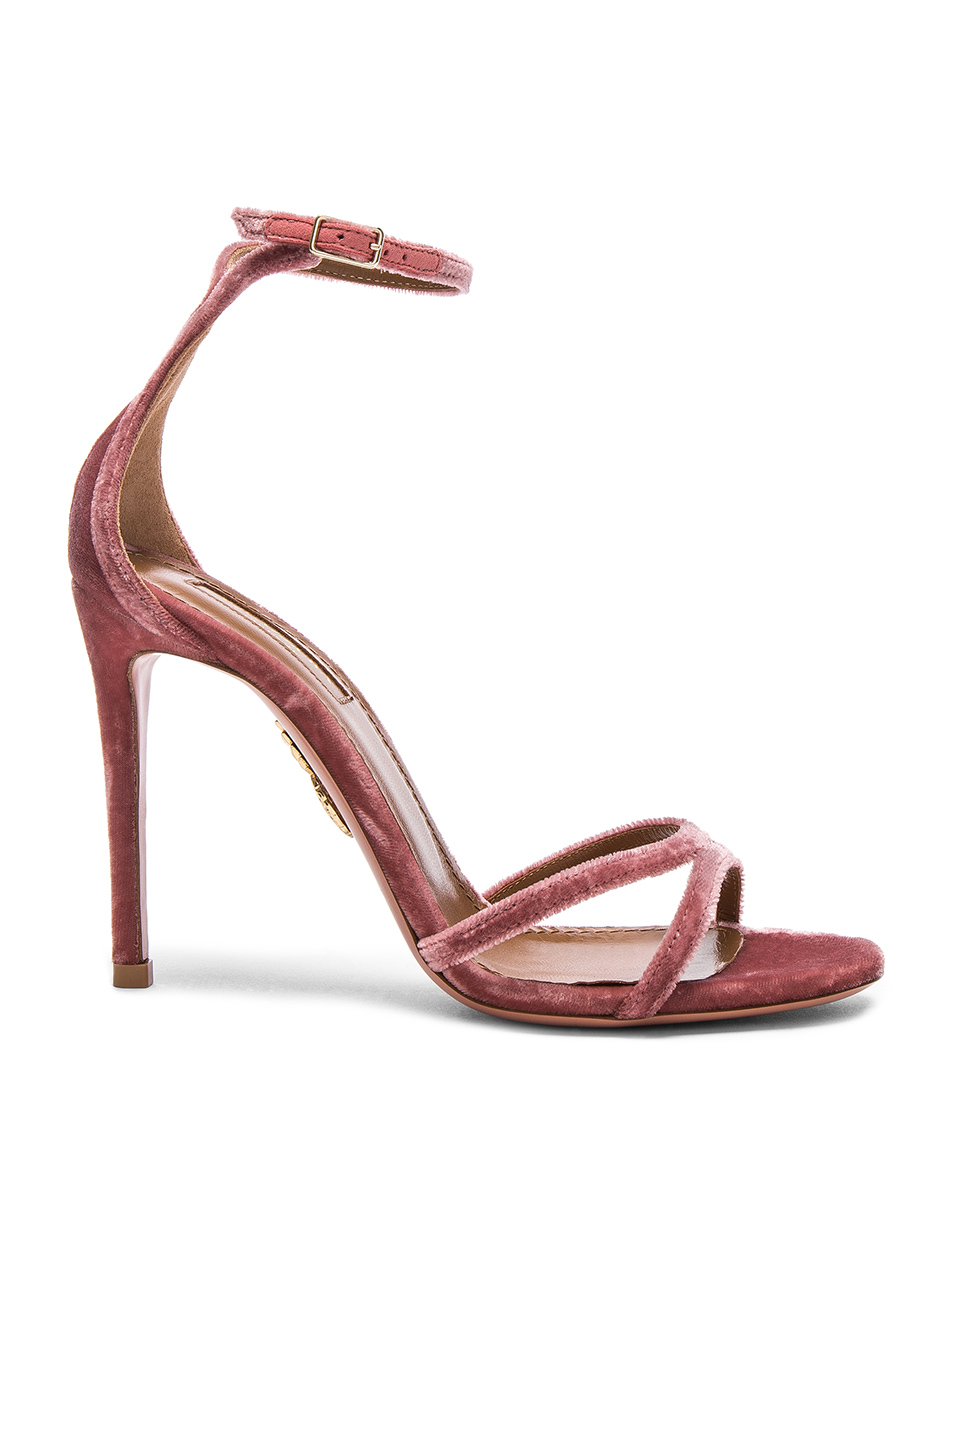 Aquazzura Velvet Purist Sandal Heels In Antique Rose | ModeSens